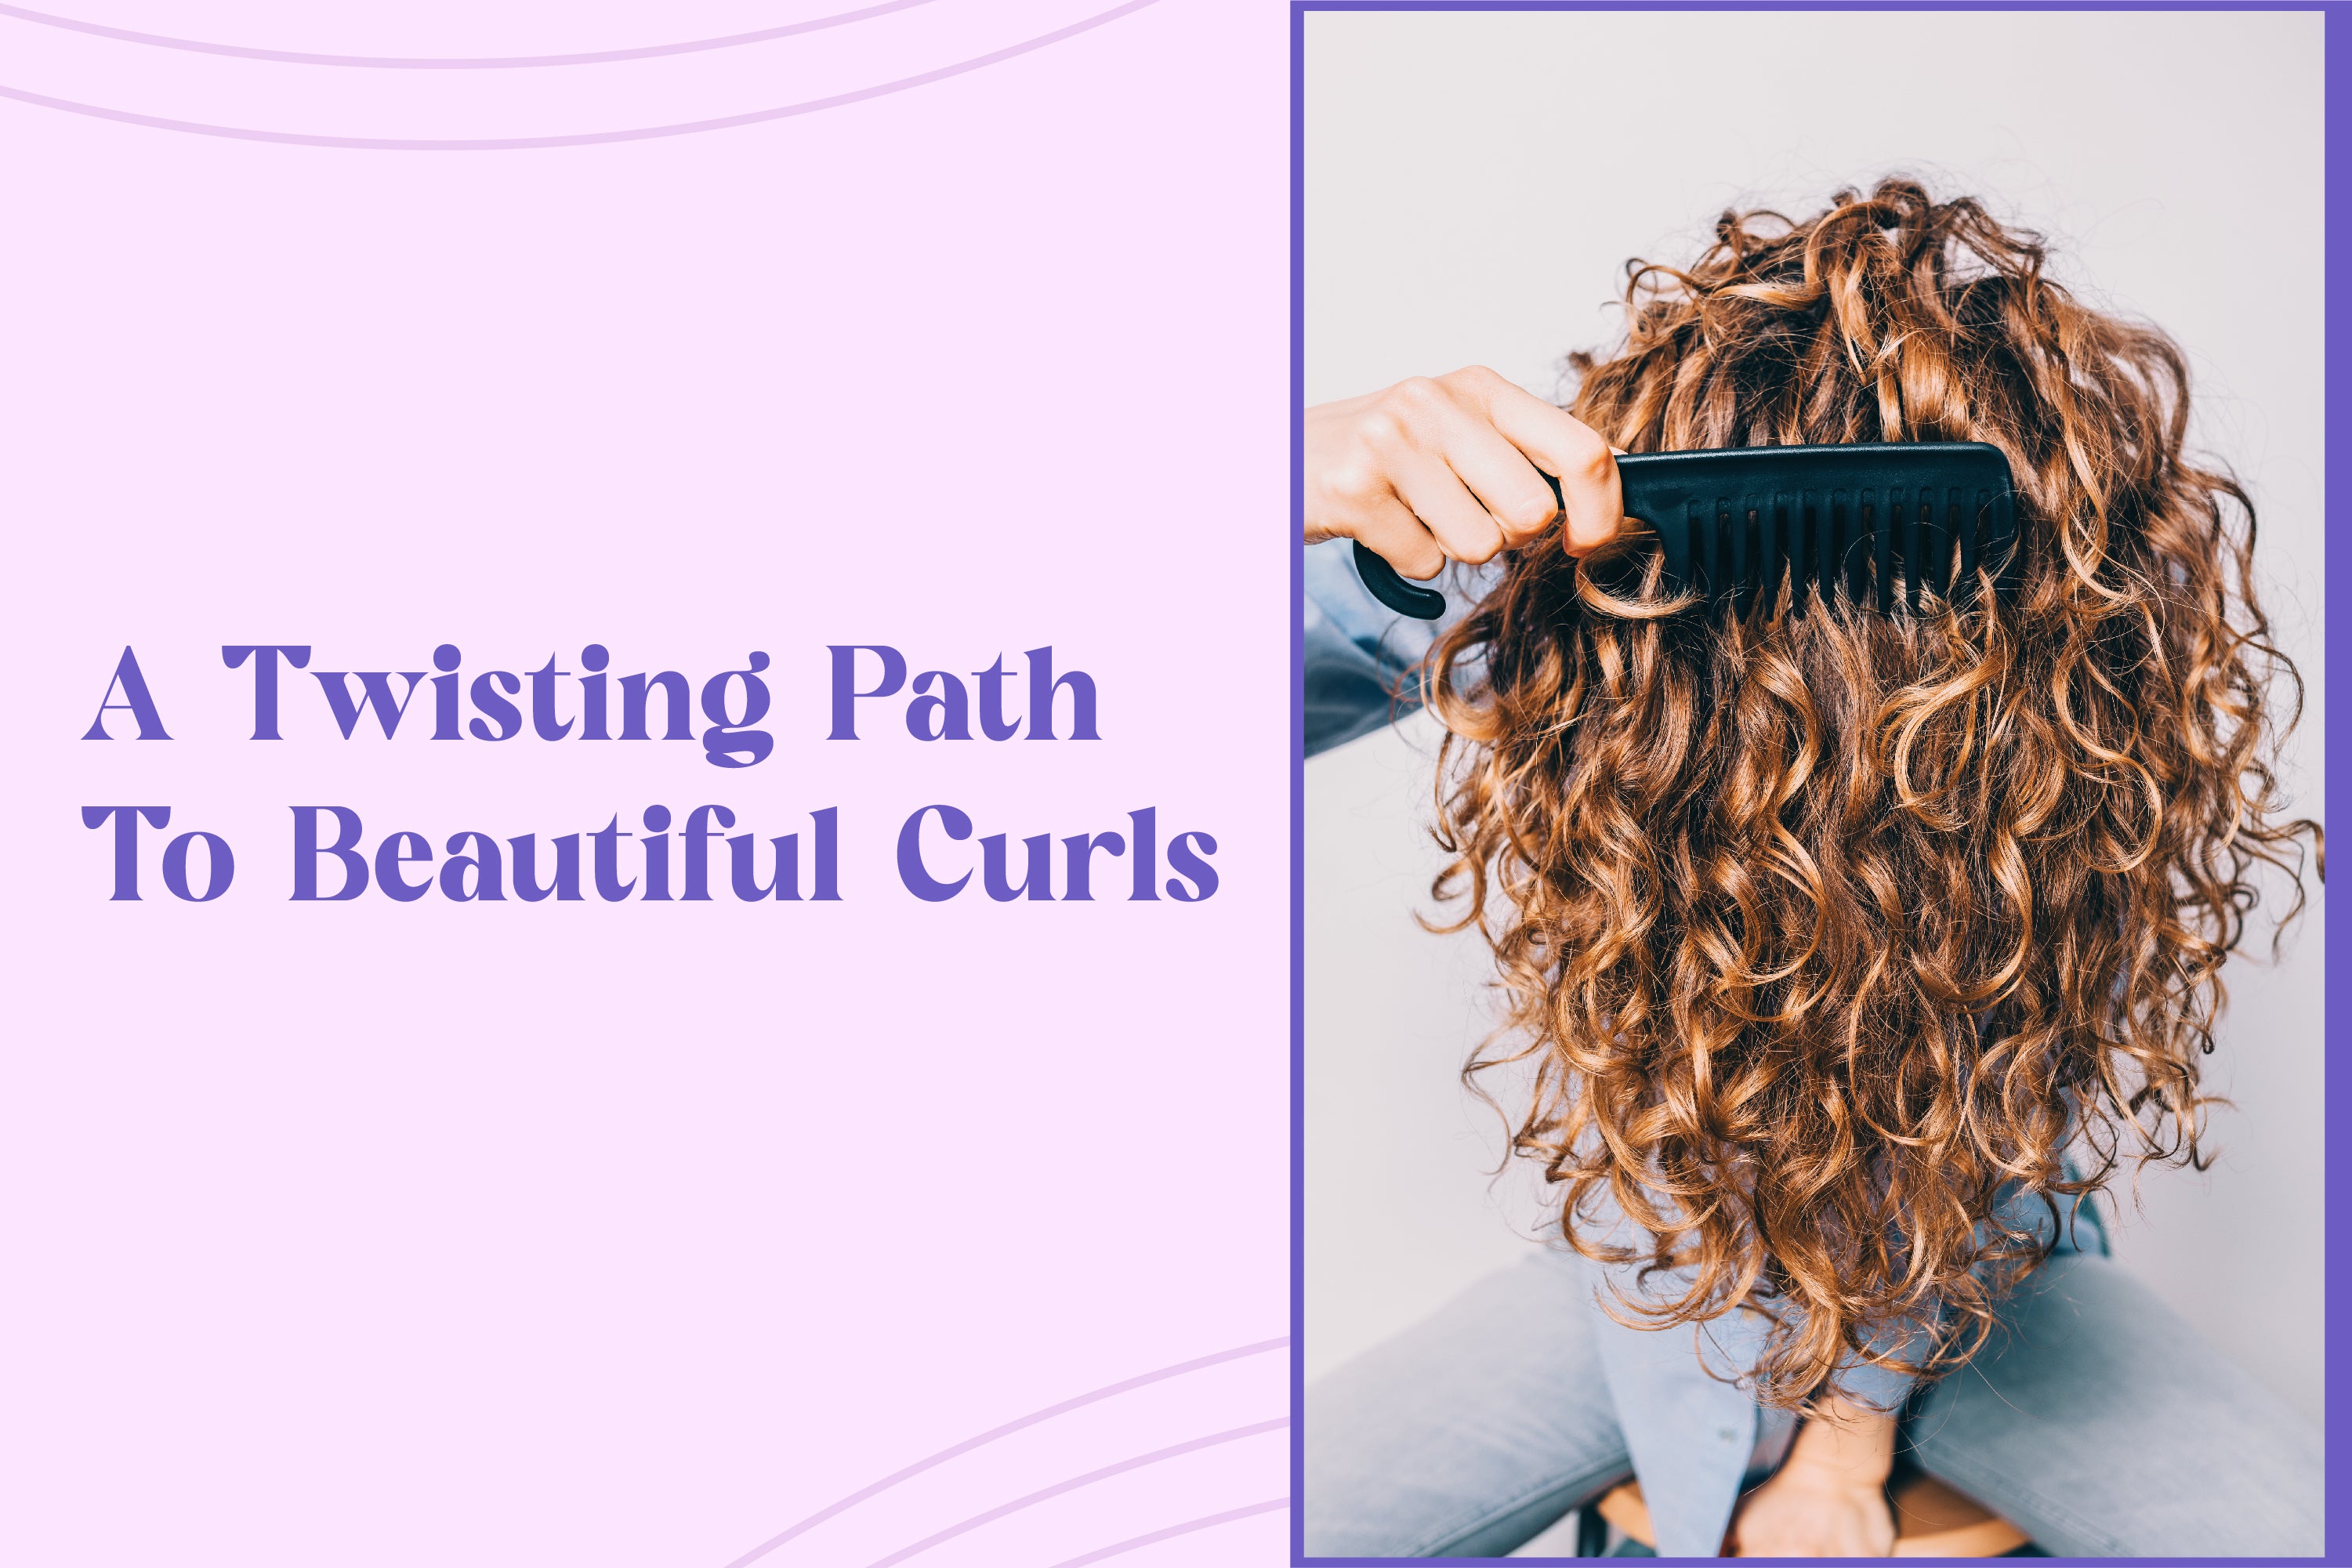 A Twisting Path To Beautiful Curls